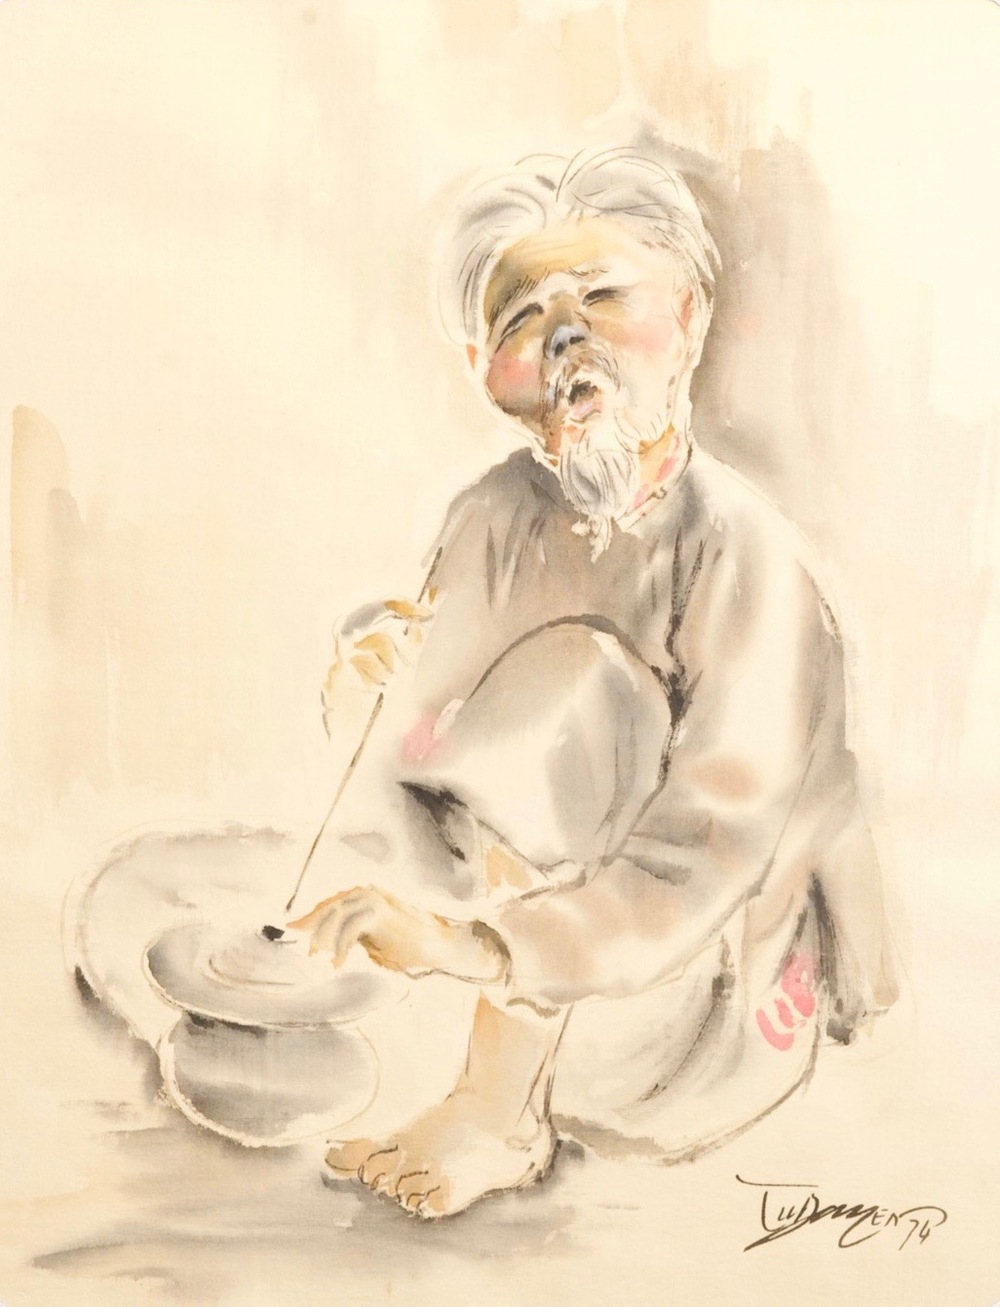 Tu Duyen (Vietnam, 1915-2012): water color on silk, dated 1974